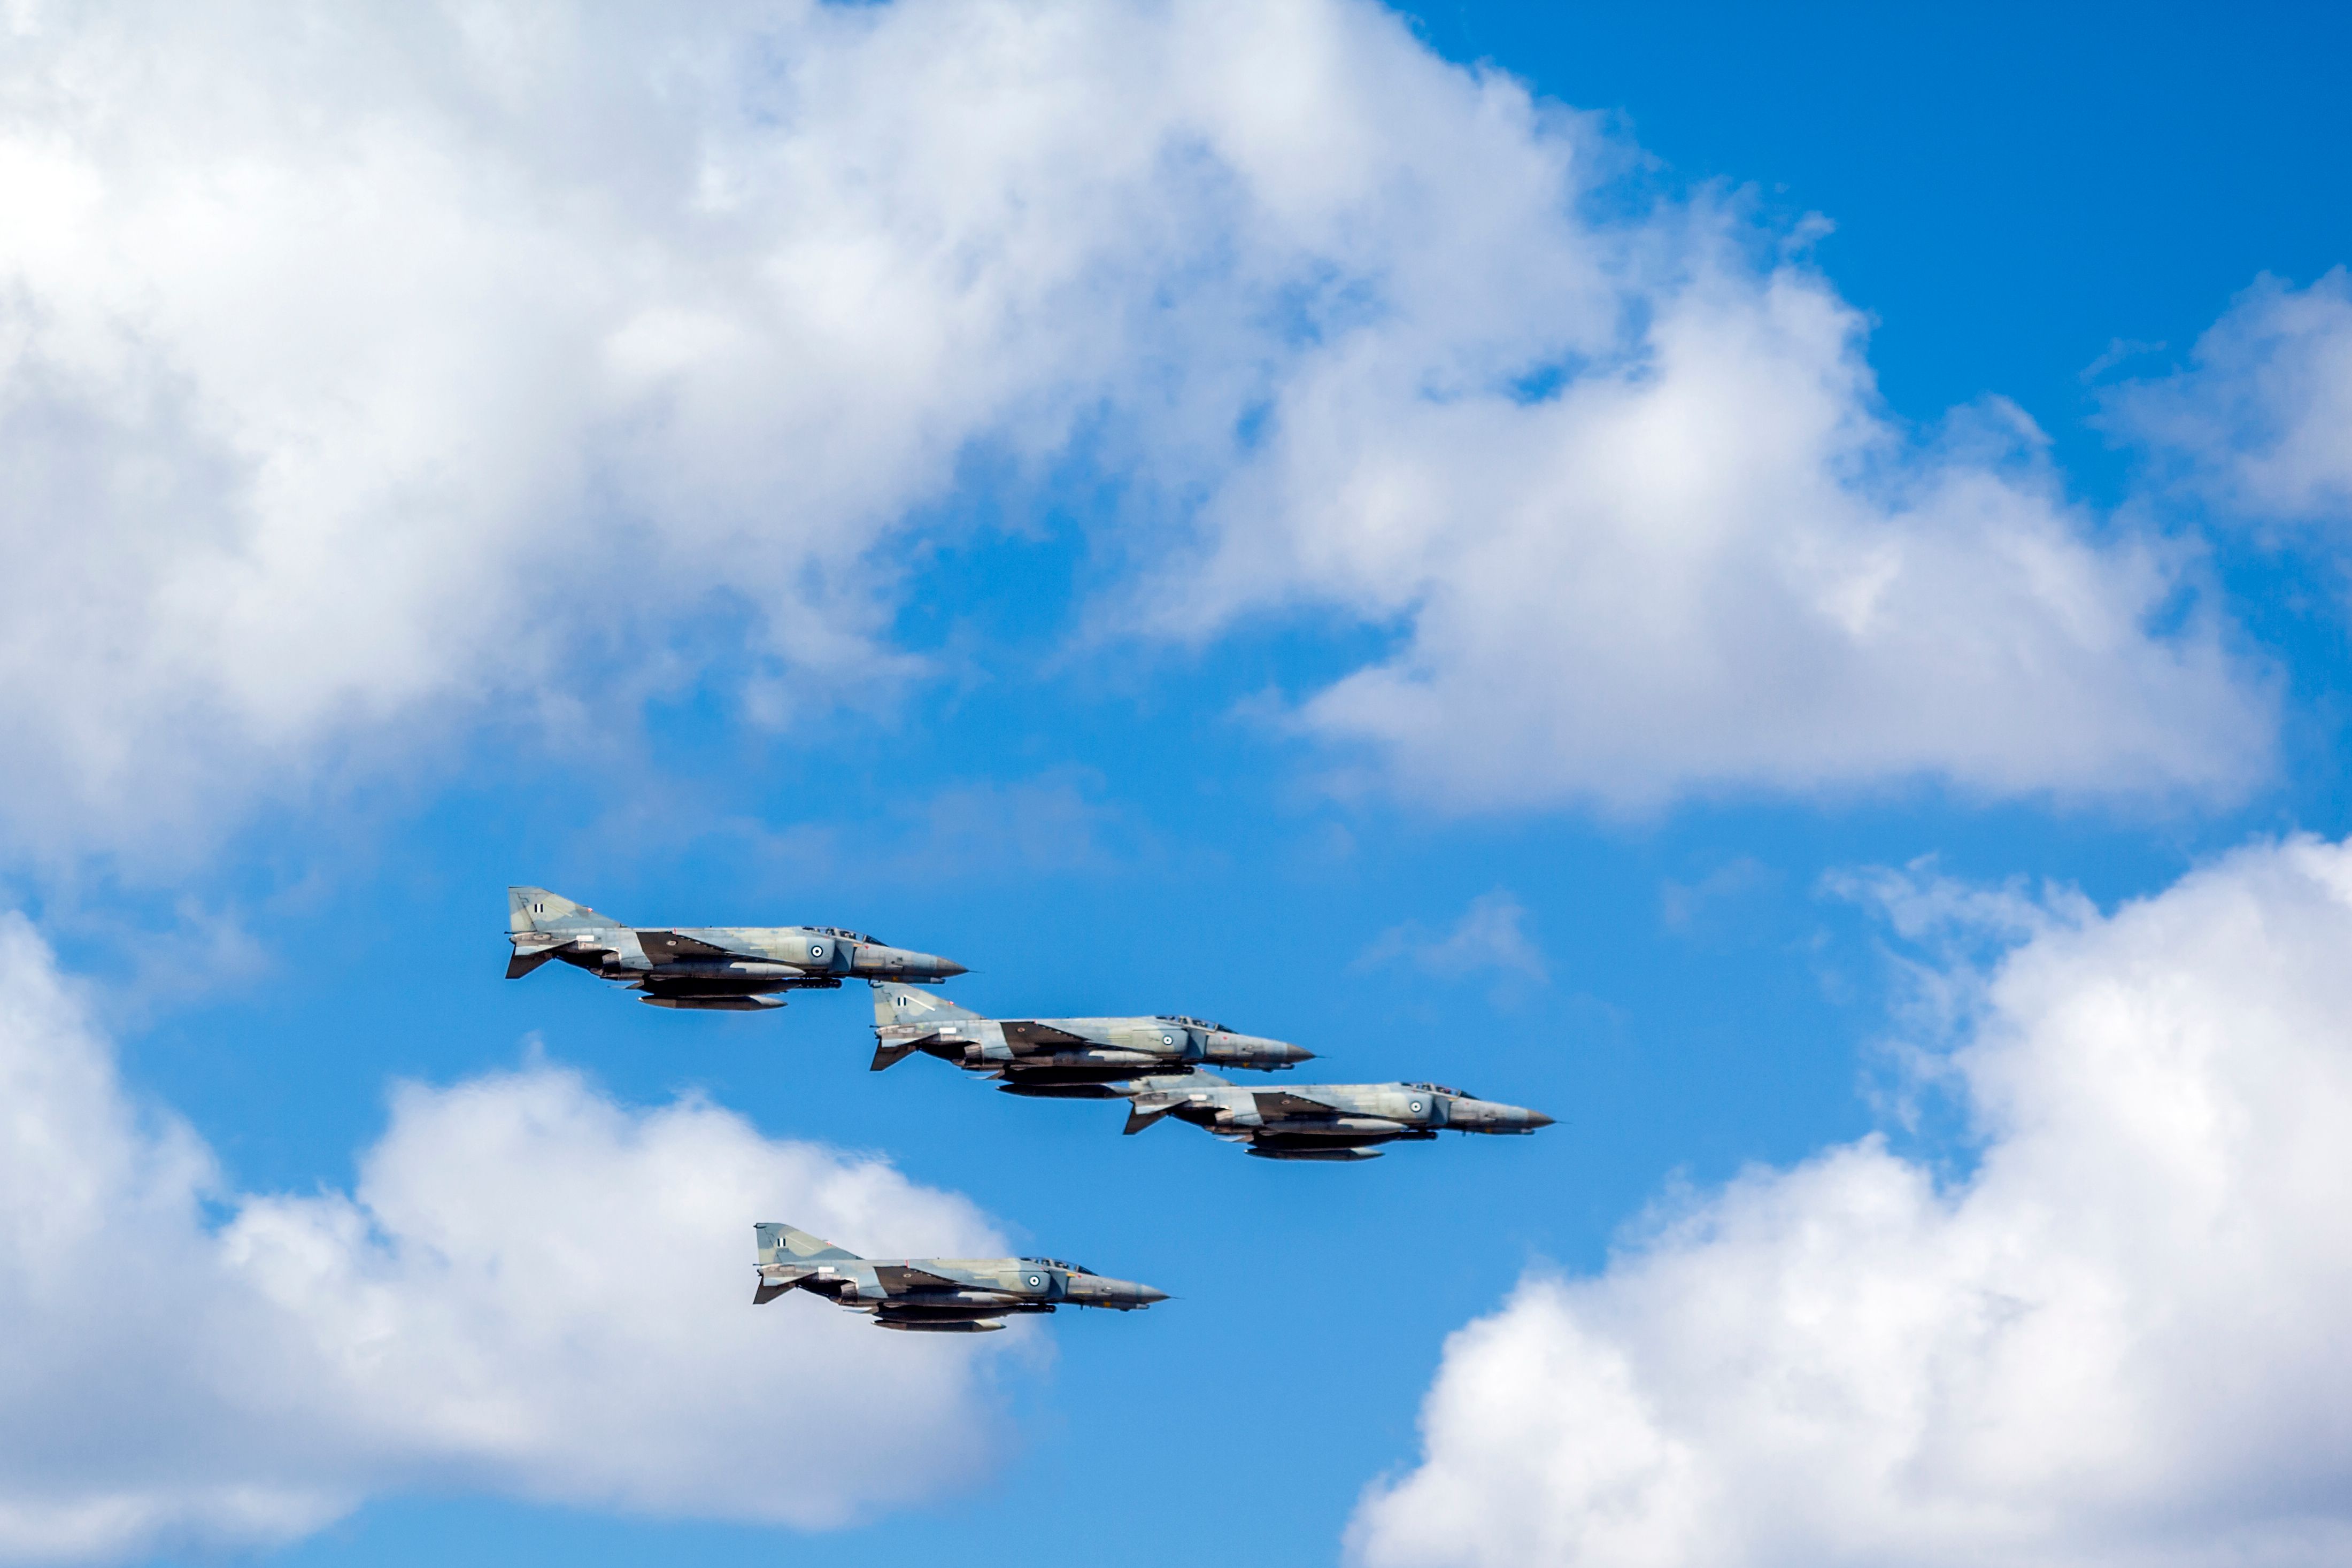 Four McDonnell Douglas F-4 Phantom II fighter jets flying in the sky.